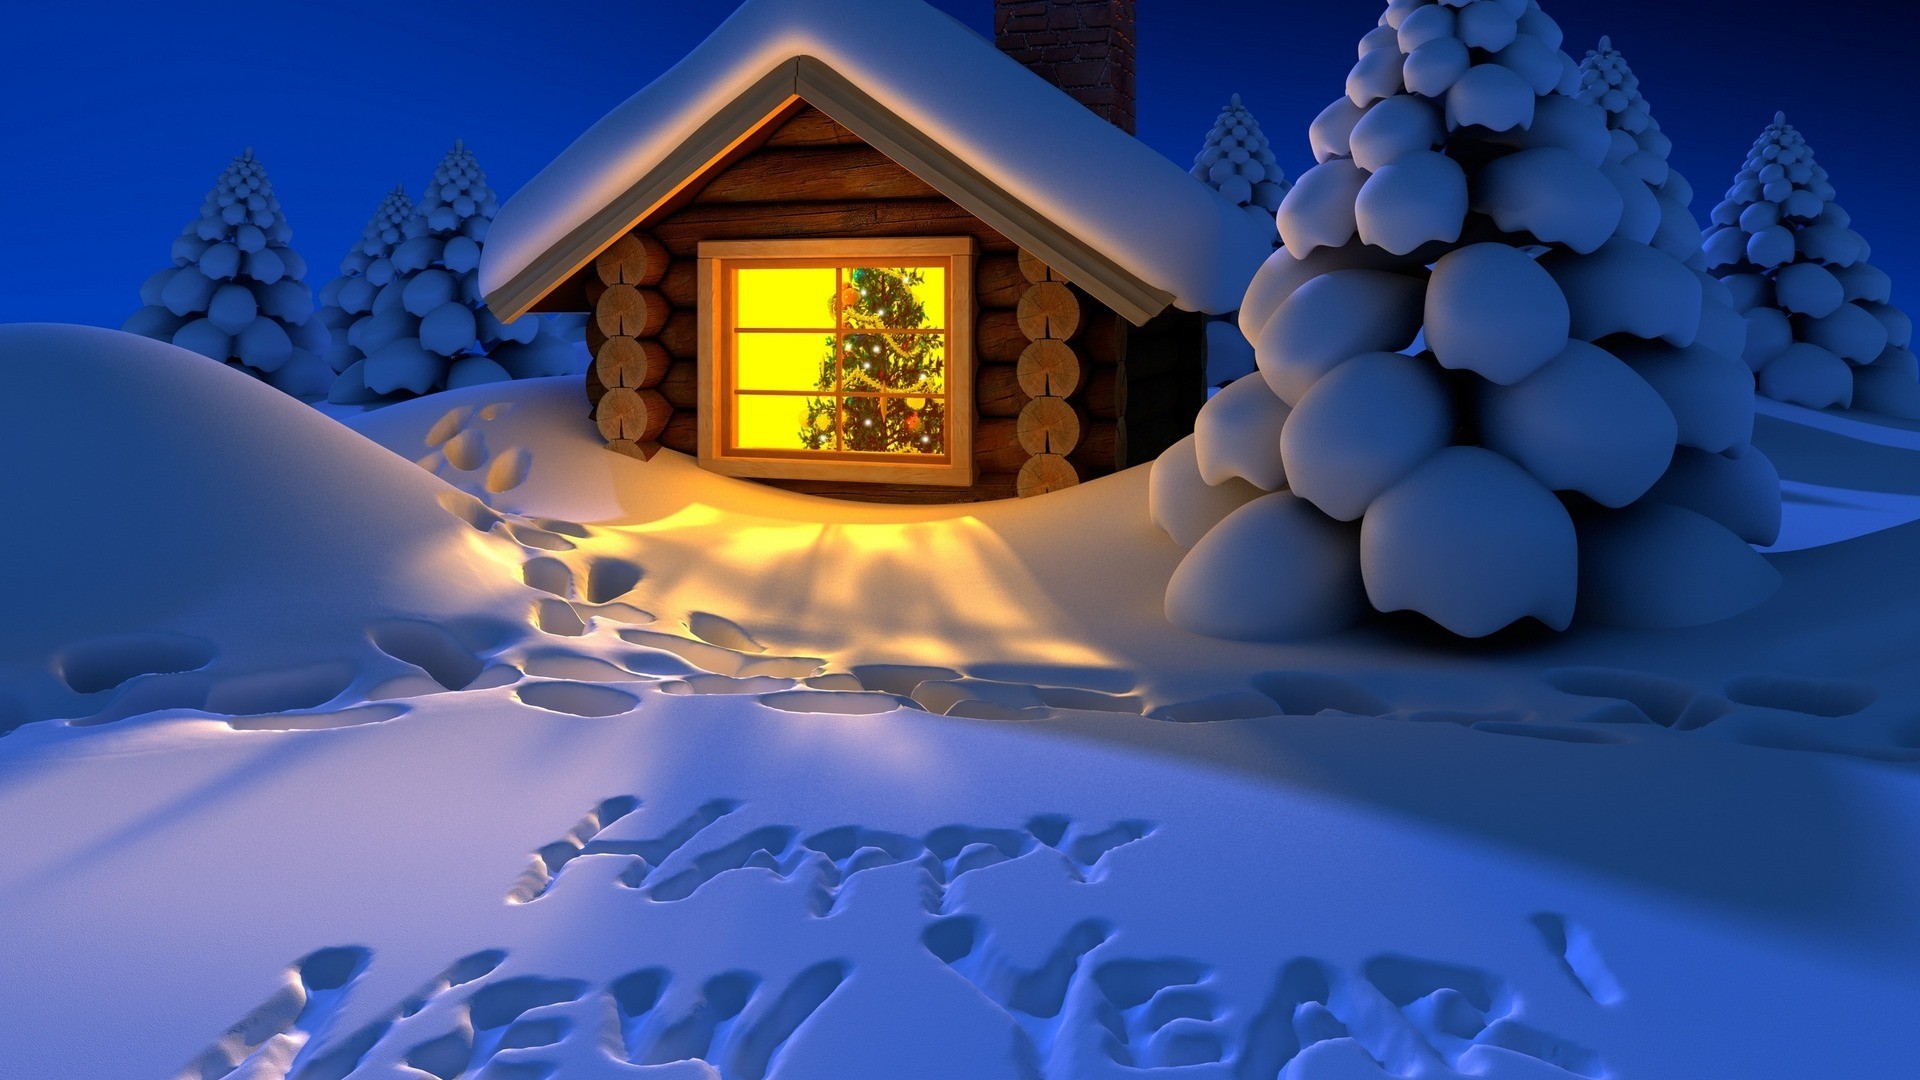 General 1920x1080 Christmas artwork digital art snow CGI holiday outdoors New Year